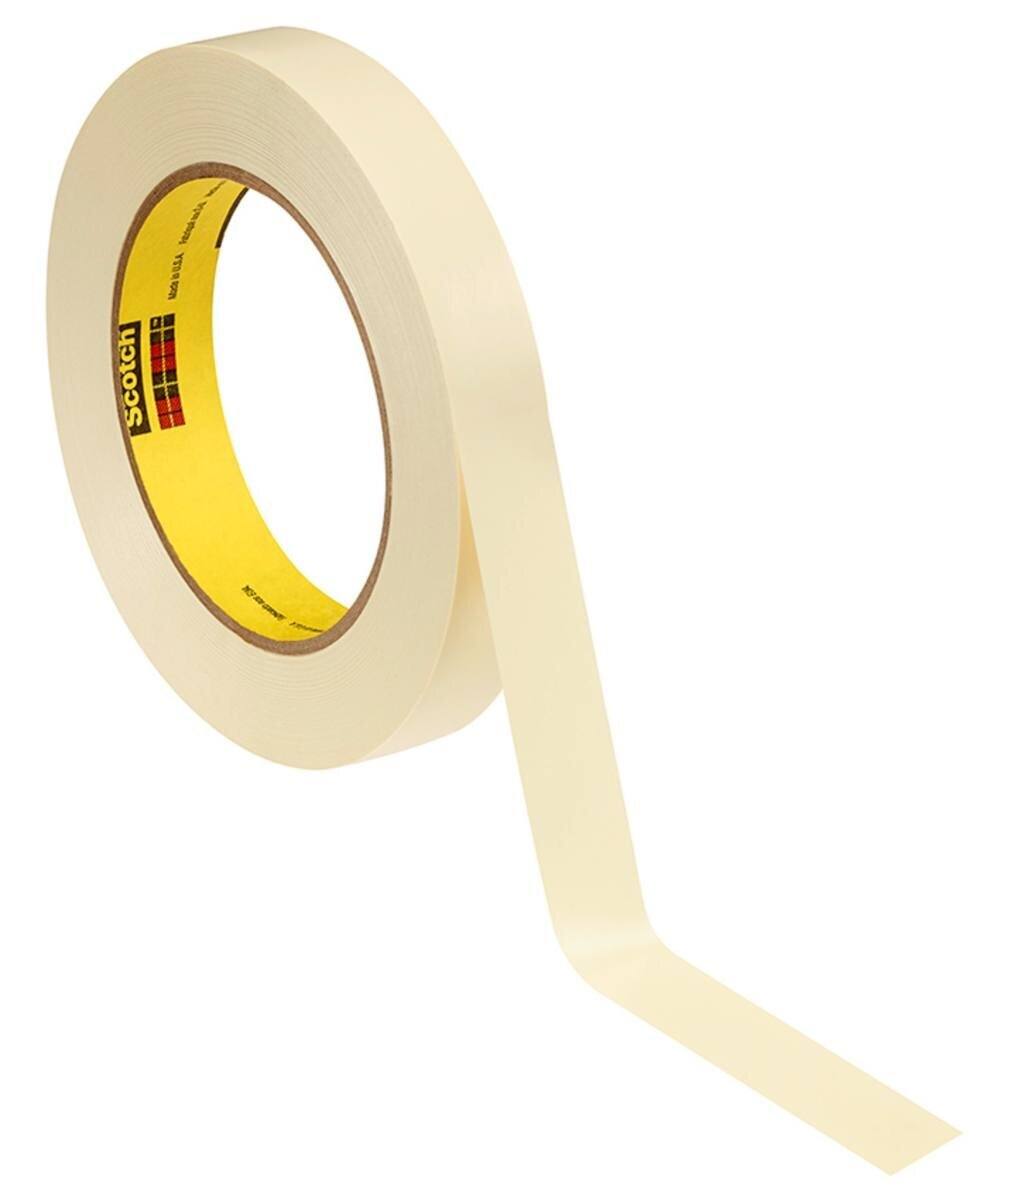 3M Electroplating tape soft PVC 470, yellow, 25 mm x 33 m, 0.18 mm